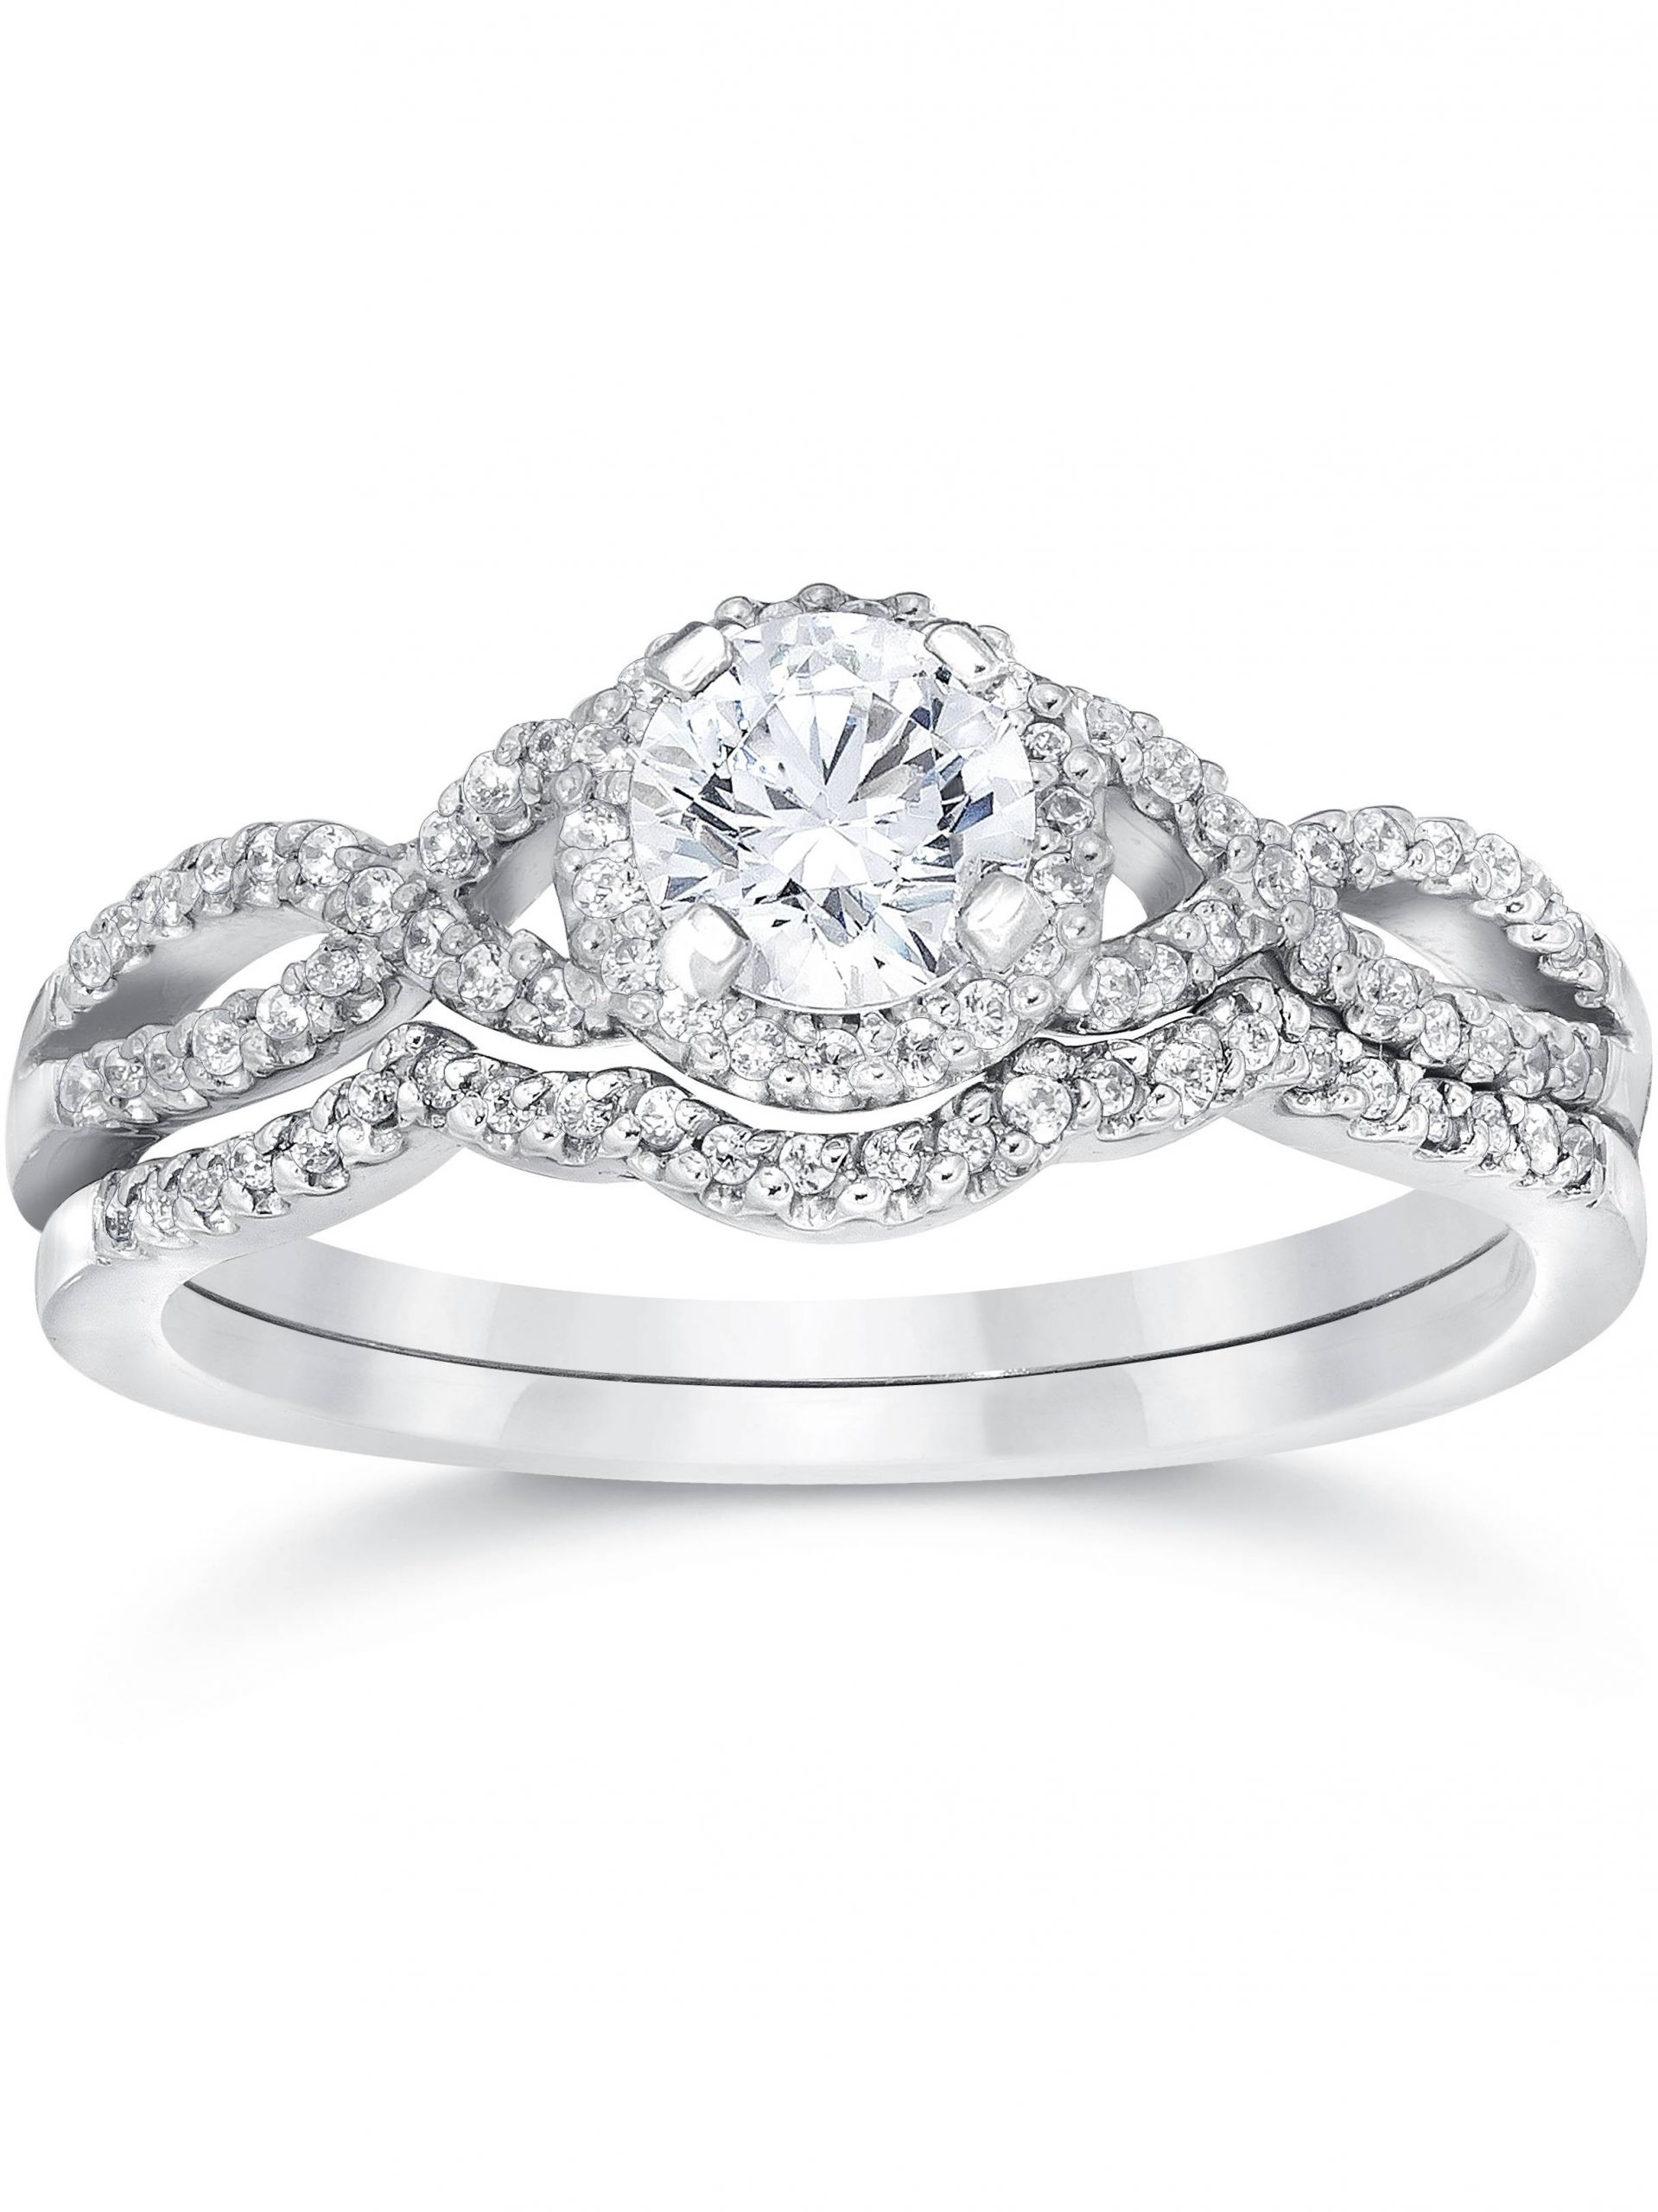 Walmart Wedding Ring Sets
 Pompeii3 Pompeii3 3 4ct Diamond Infinity Engagement